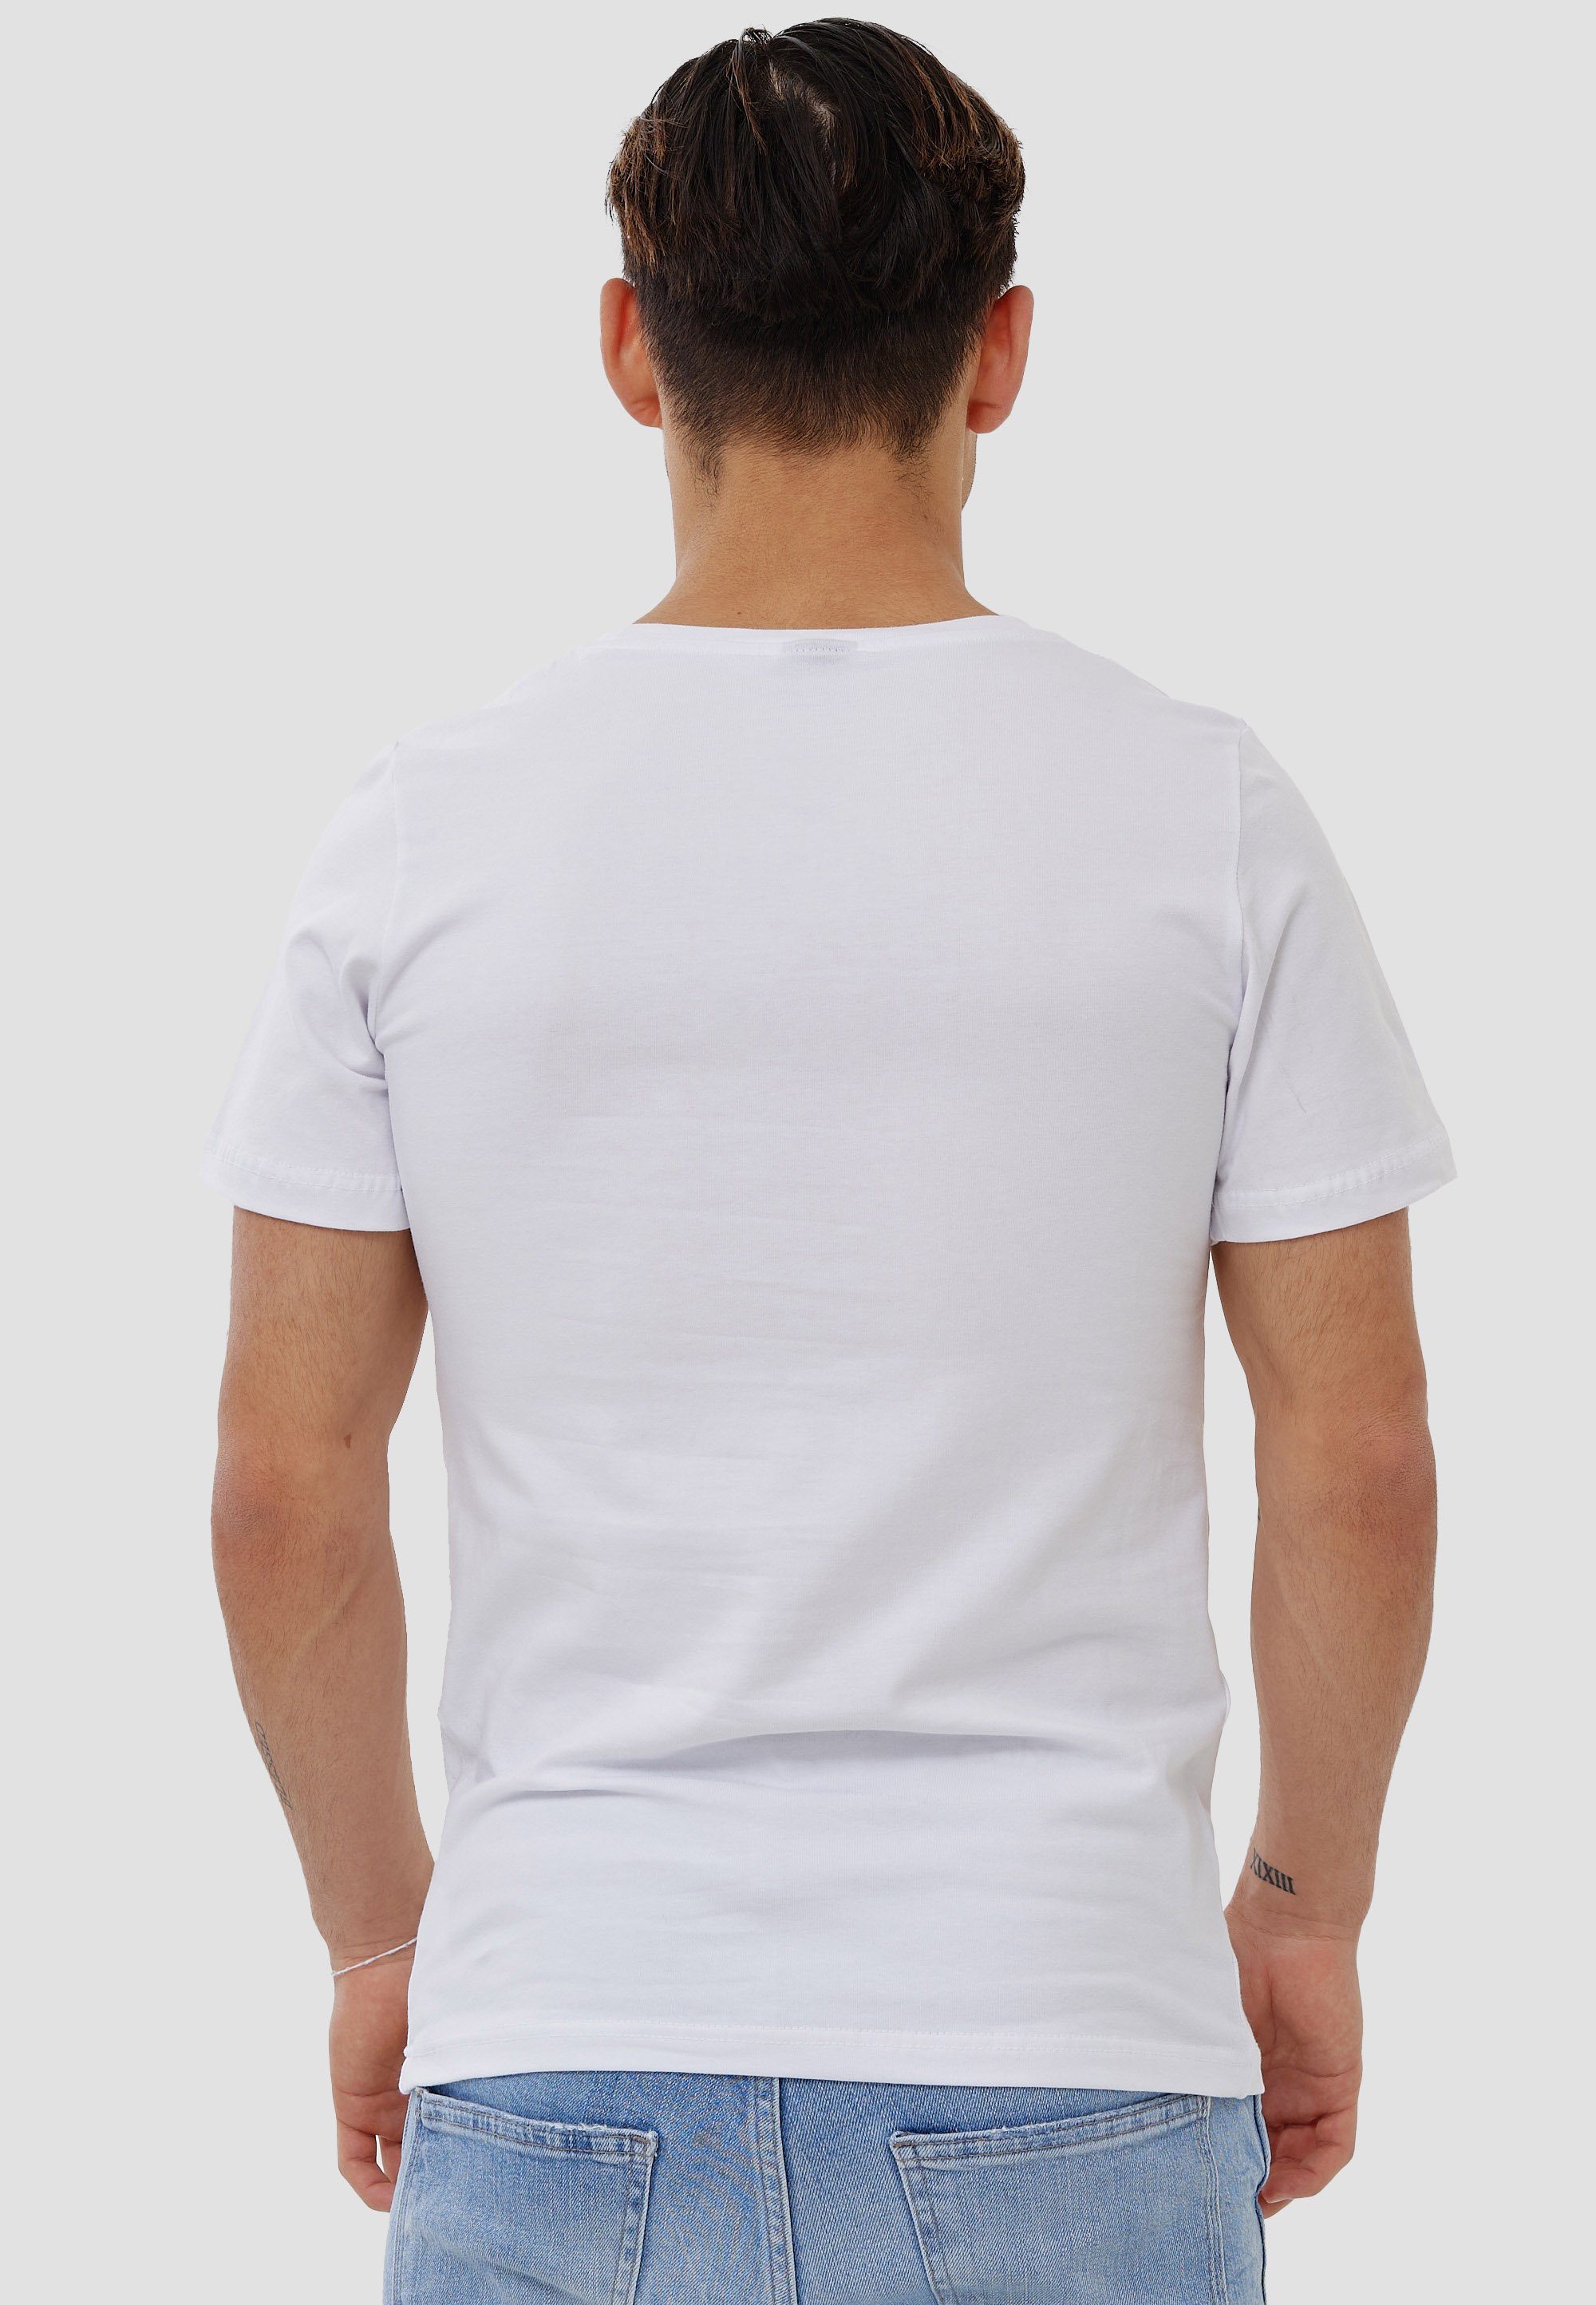 Casual Freizeit Fitness modischem T-Shirt OneRedox Weiß (Shirt TS-3719C im Polo Design) 1-tlg., Tee, Kurzarmshirt